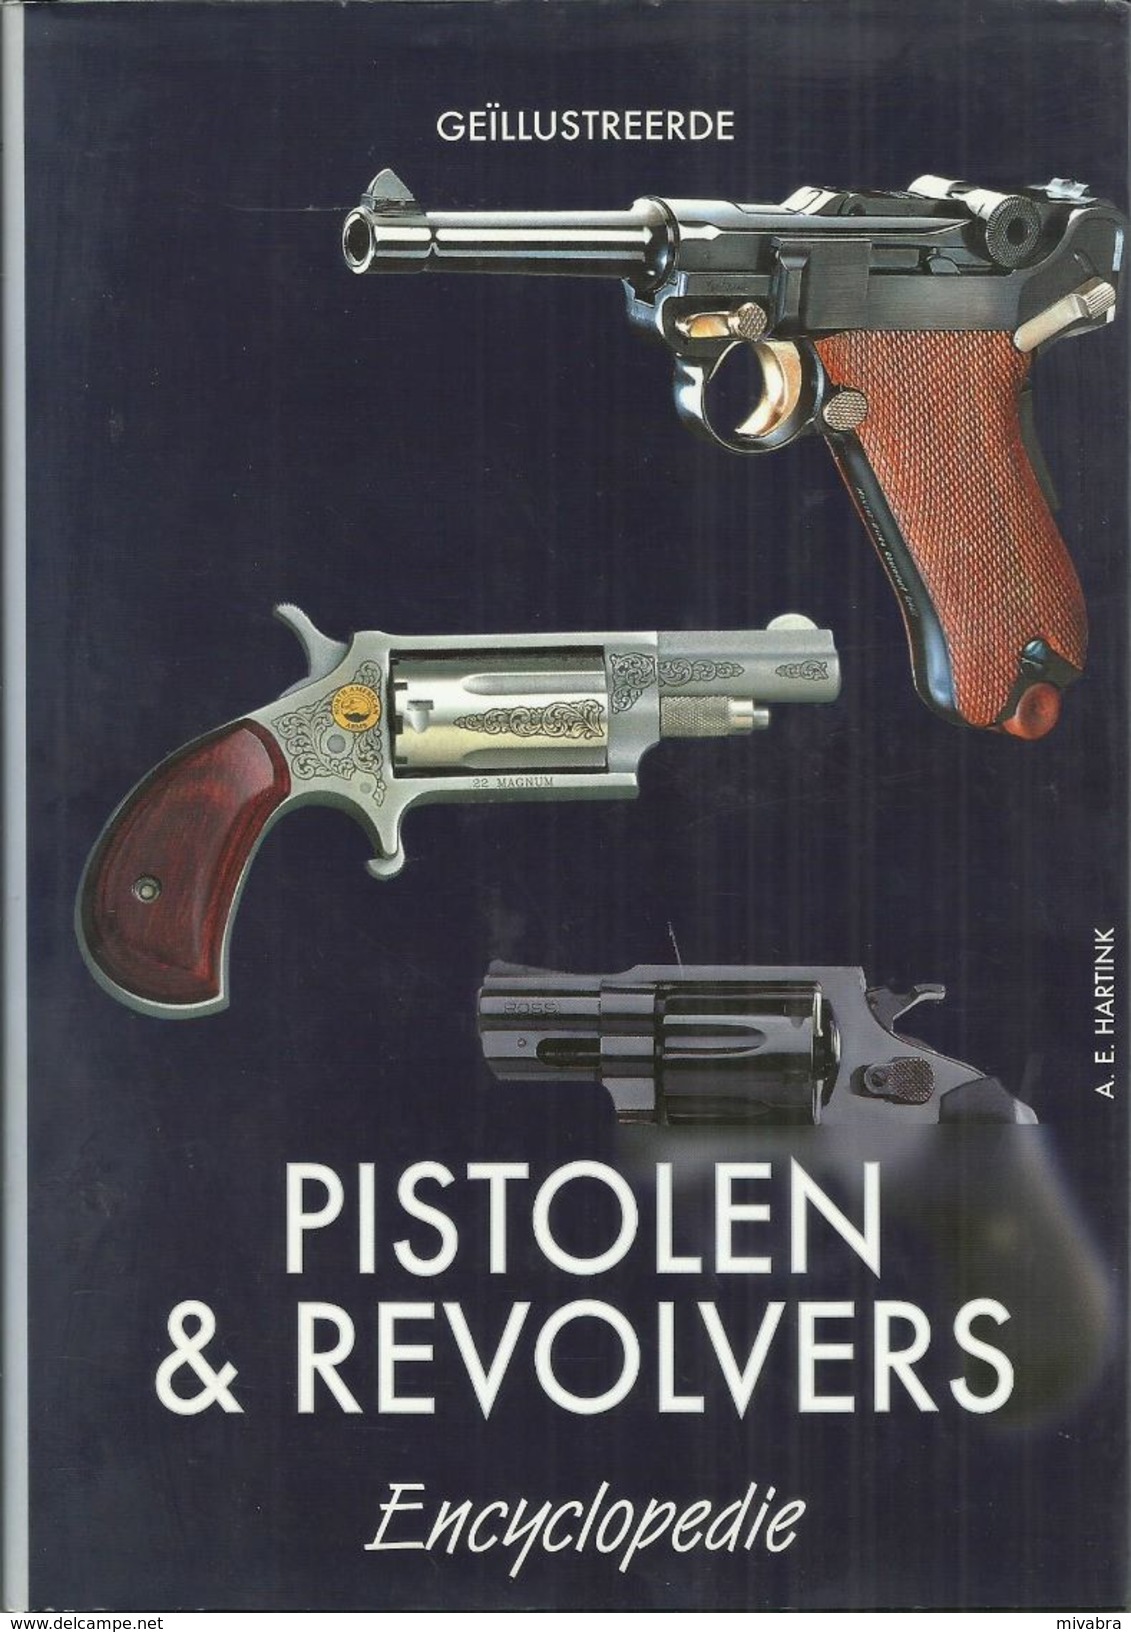 GEÏLLUSTREERDE PISTOLEN & REVOLVERS ENCYCLOPEDIE - A. E. HARTINK -  R &B 2003 - Enzyklopädien